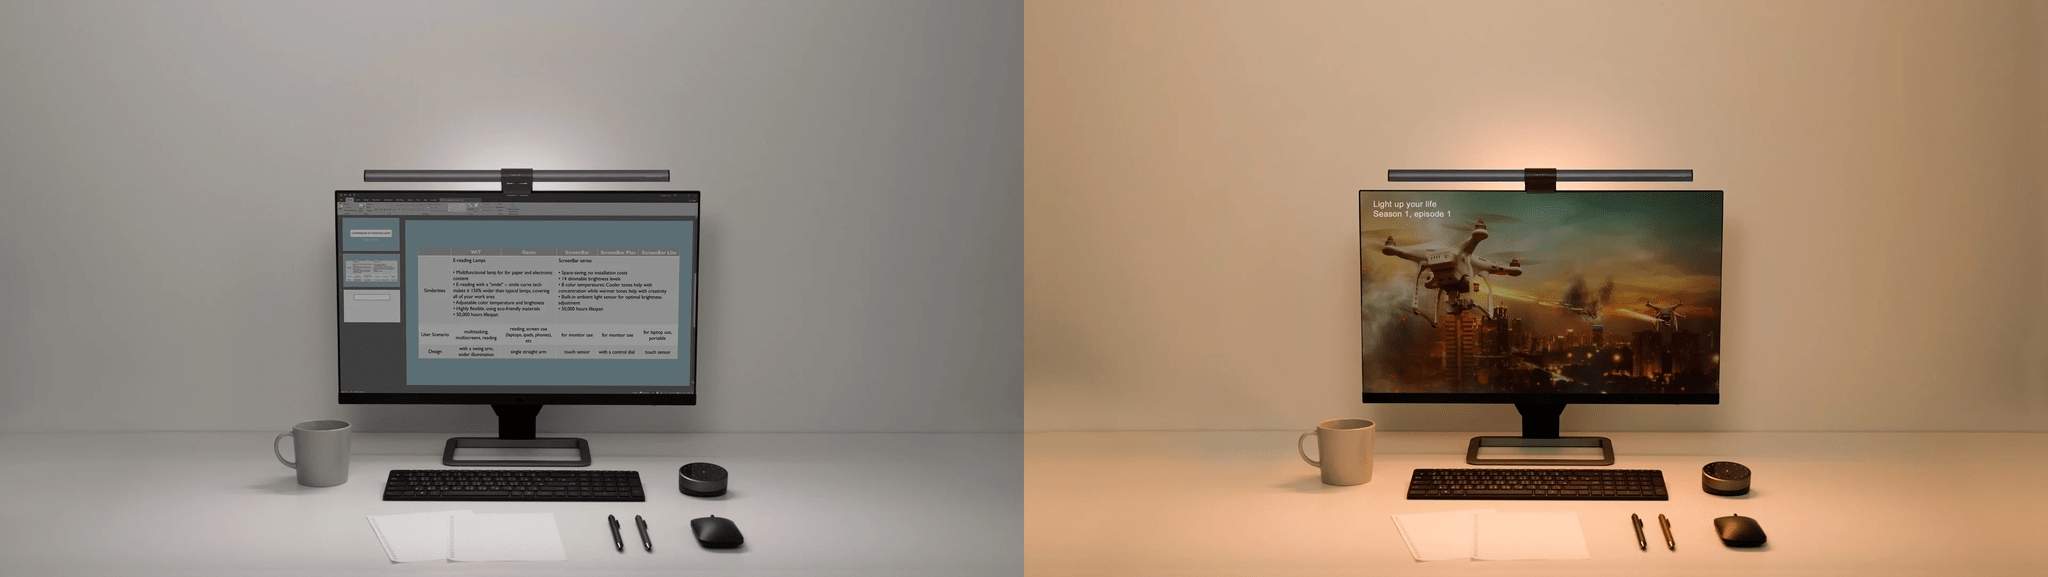 Review: The BenQ ScreenBar LED Lamp - Light And Matter